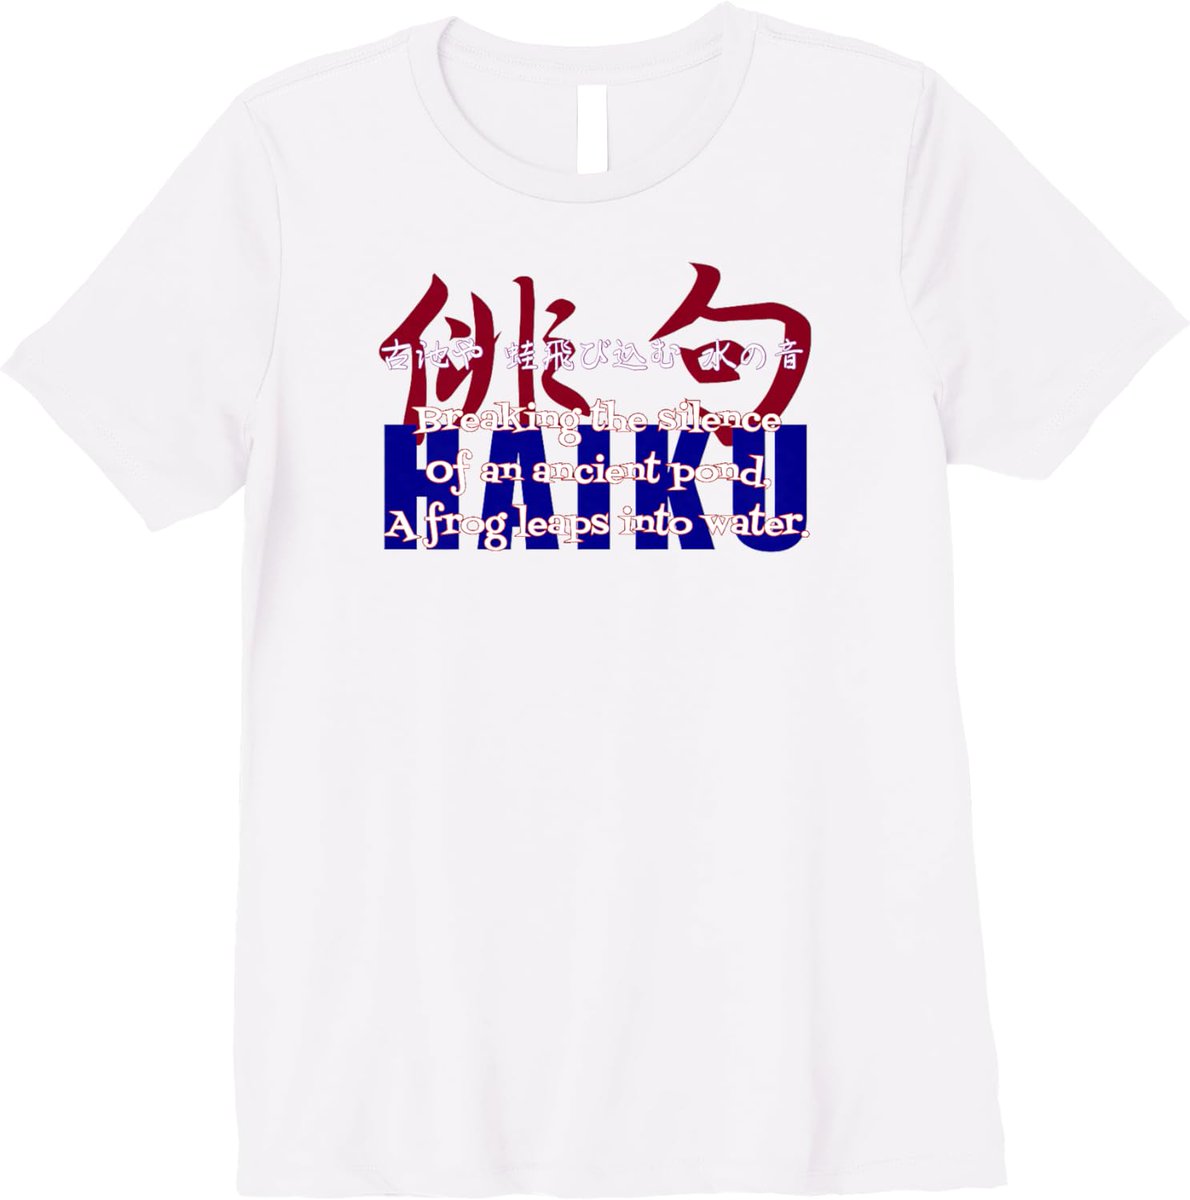 Haiku Premium T-Shirt
amazon.com/dp/B0CTQFVCDH?…
#poem #poems #lyrics #words #haiku #Japanese #Japan #design #print #printing #originaldesign #originalprint #tshirts #tshirtprinting #shirts #fashion #tshirt #ladiesfashion #ladiesapparel #womenapparel #womenfashion #womensfashion